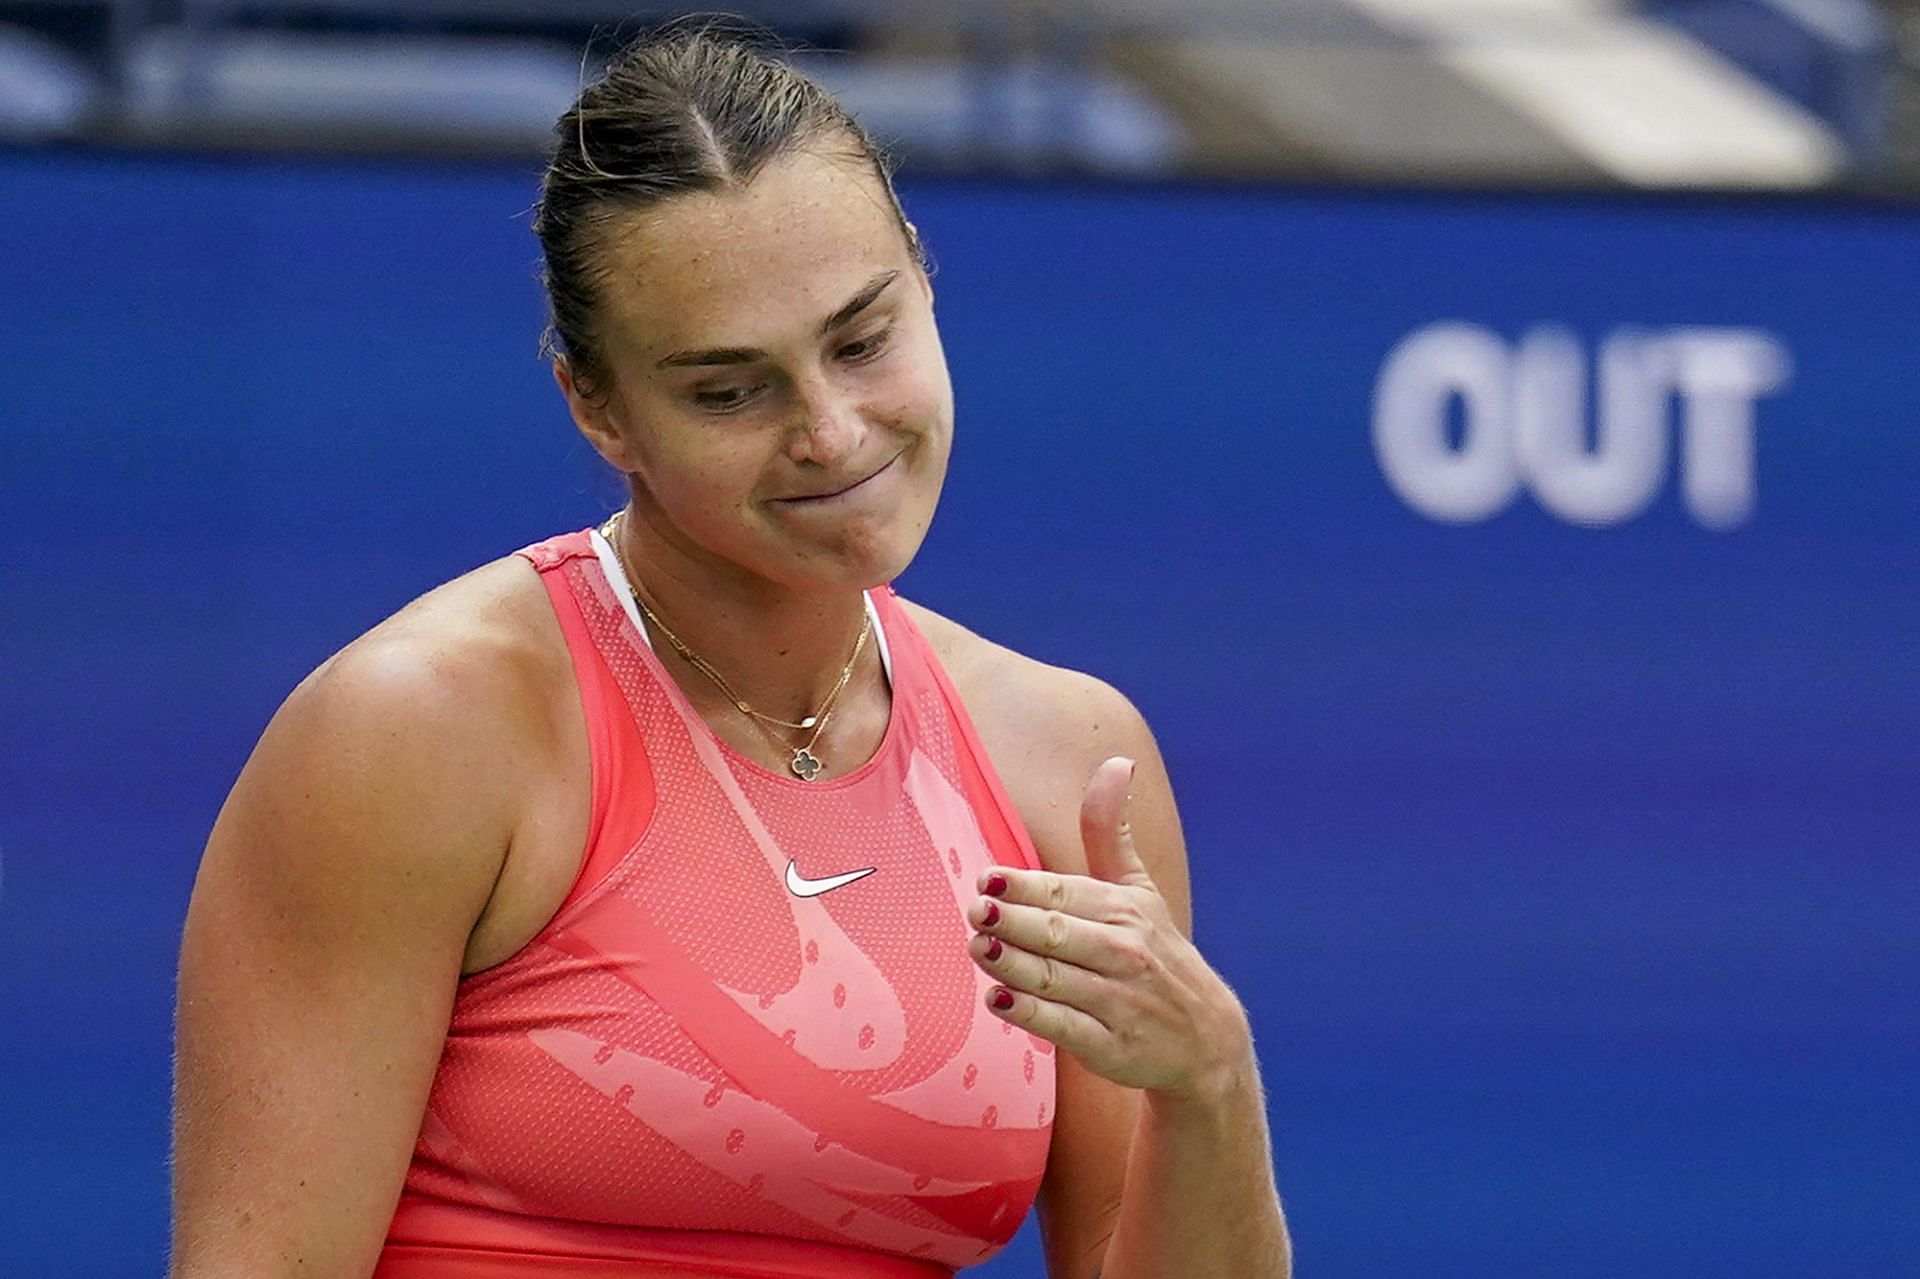 Aryna Sabalenka will take on Coco Gauff in the US Open final